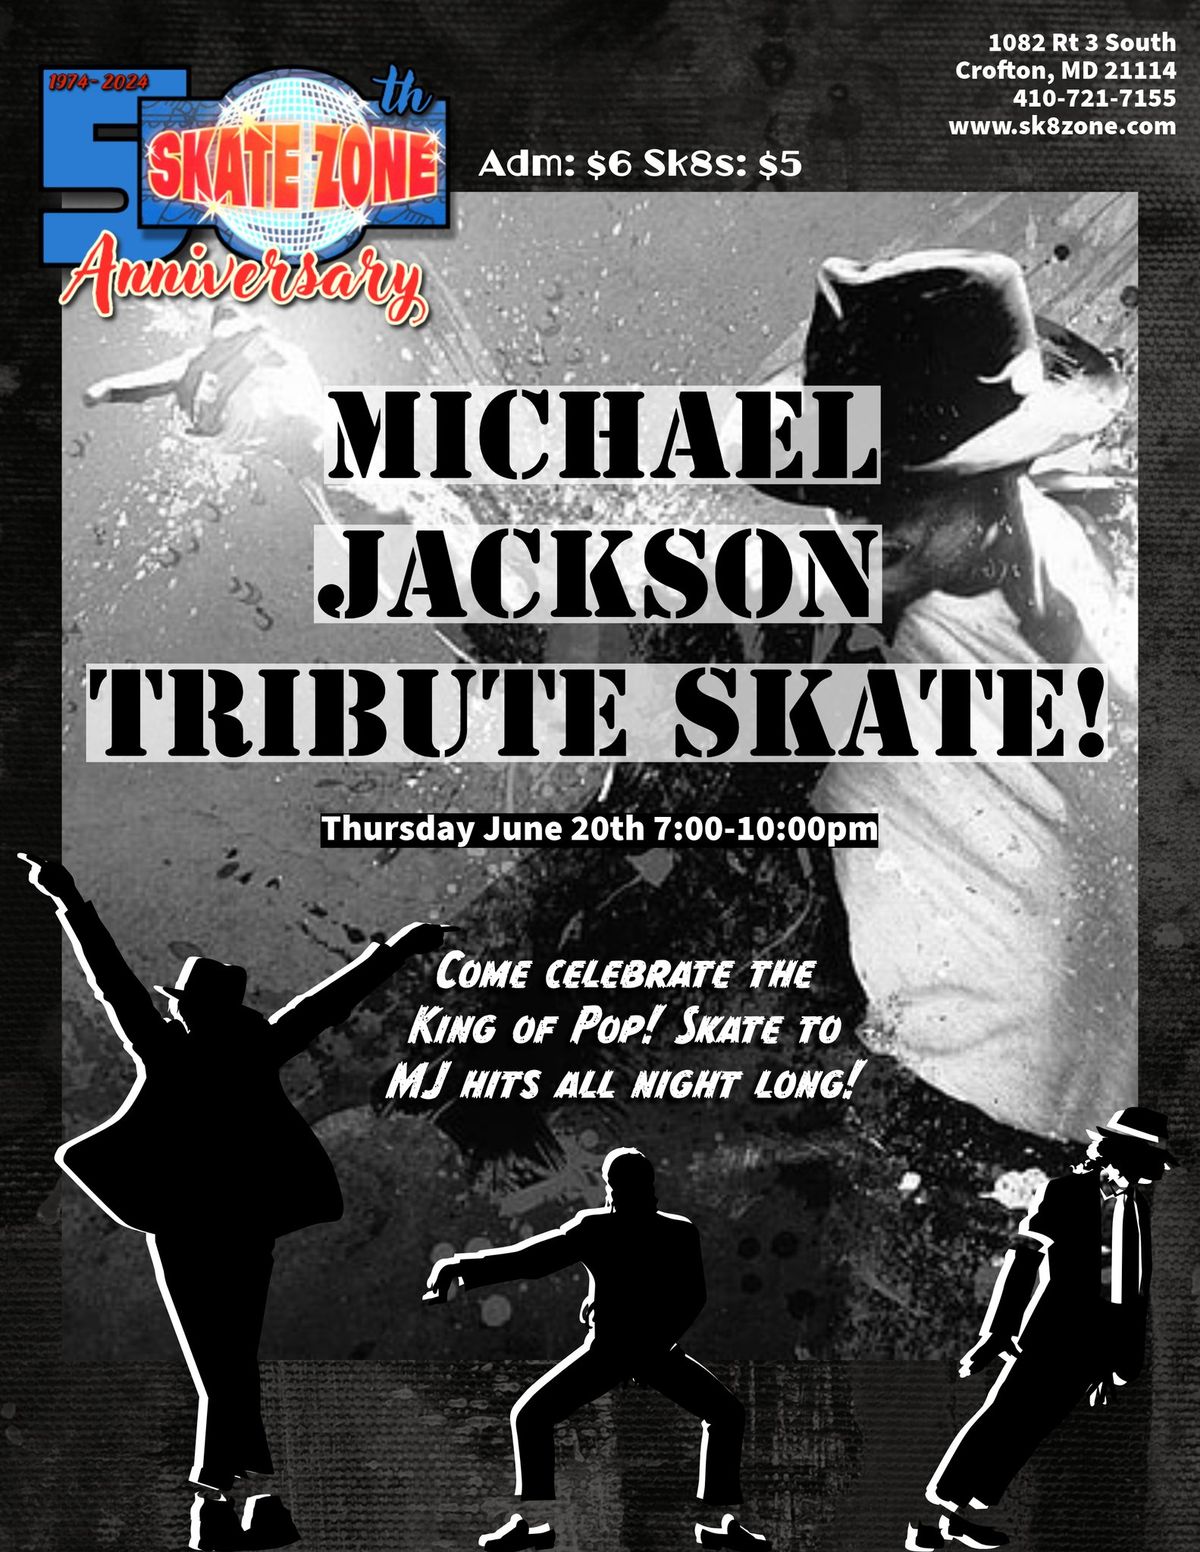 Michael Jackson Tribute Skate!